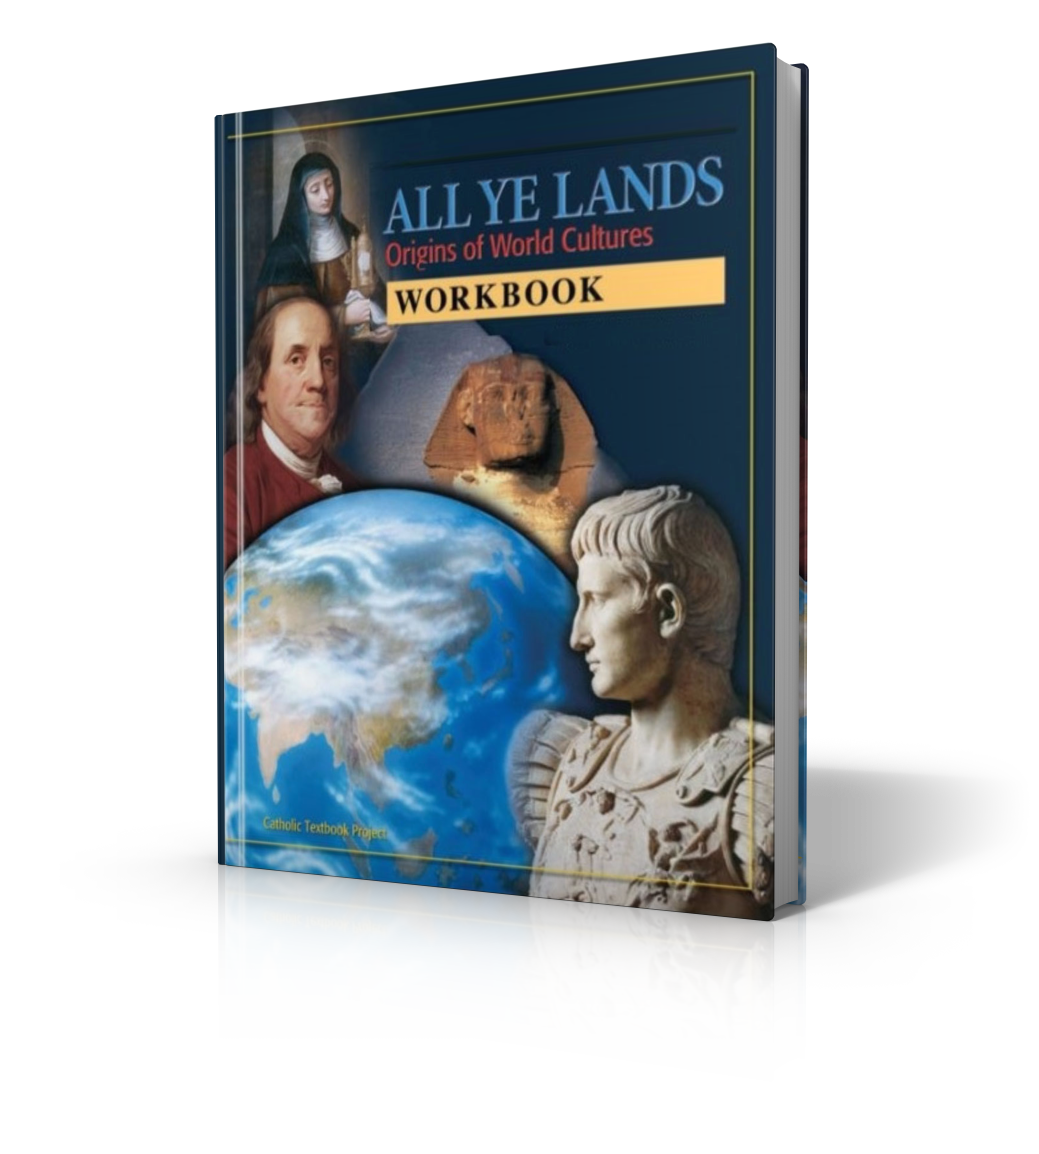 All Ye Lands: Origin of World Cultures (Workbook)